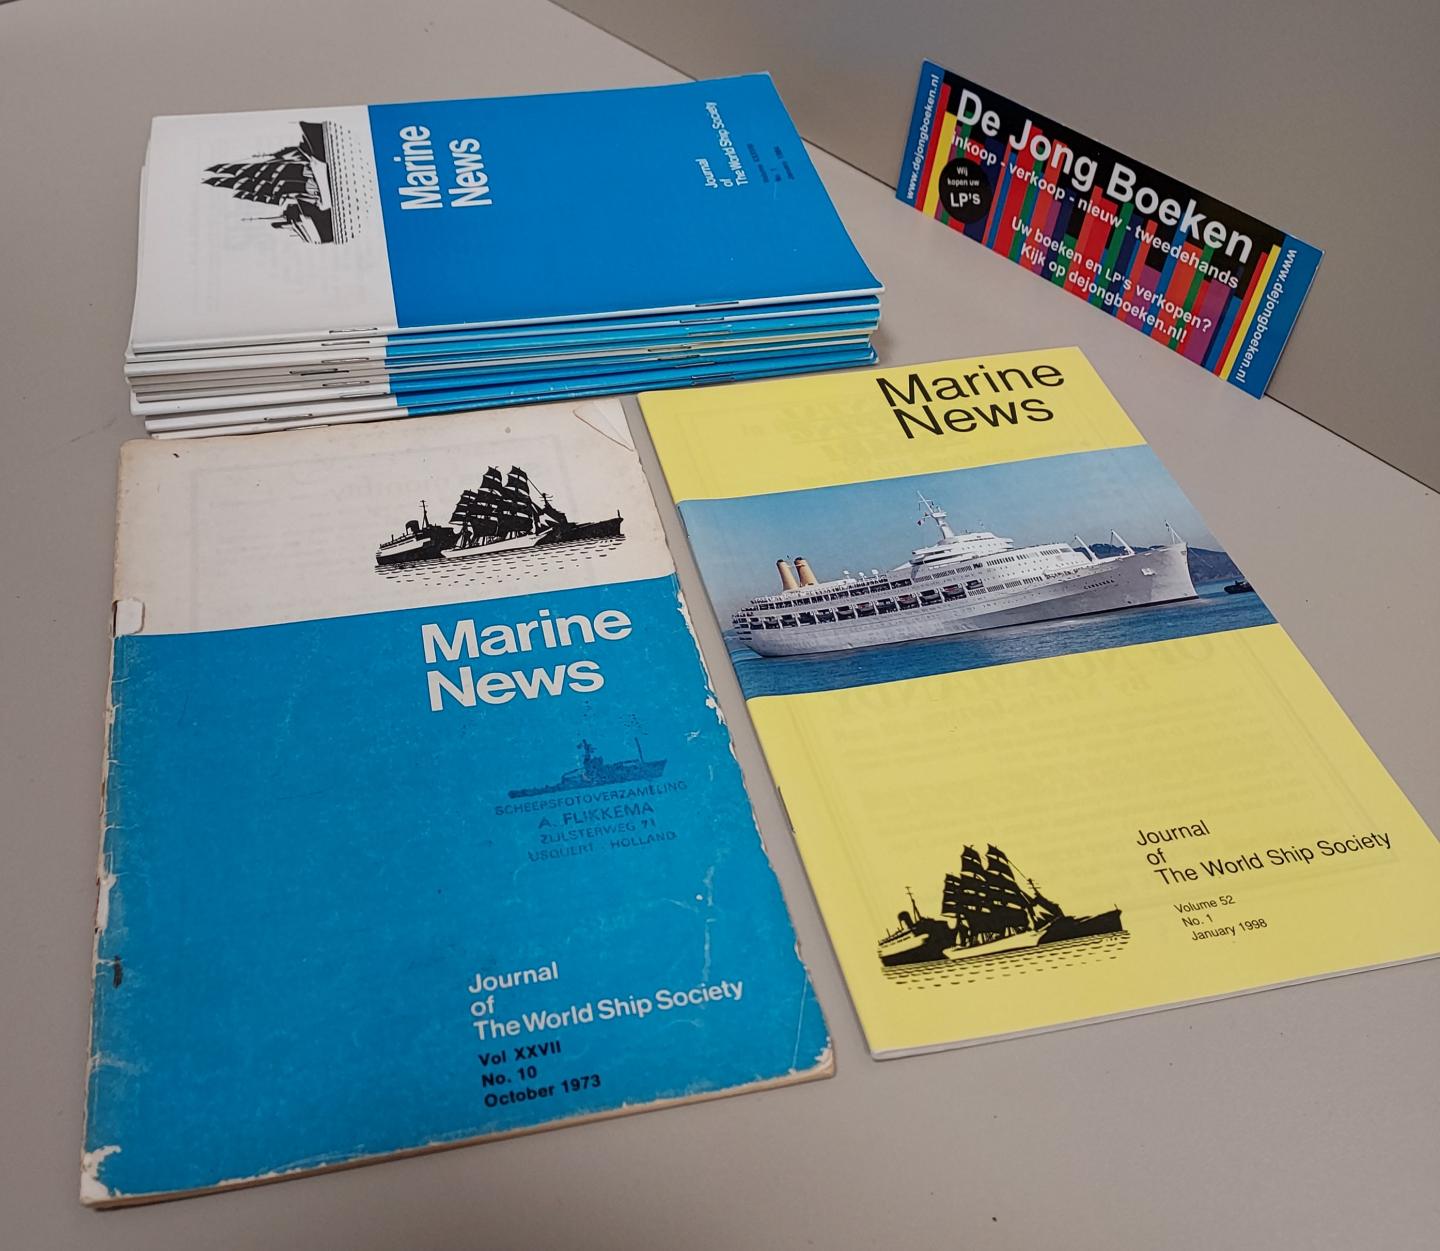  - Marine News, Journal of the World Ship Society: 1984 (oktober en november ontbreken) + oktober 1973 + januari 1998